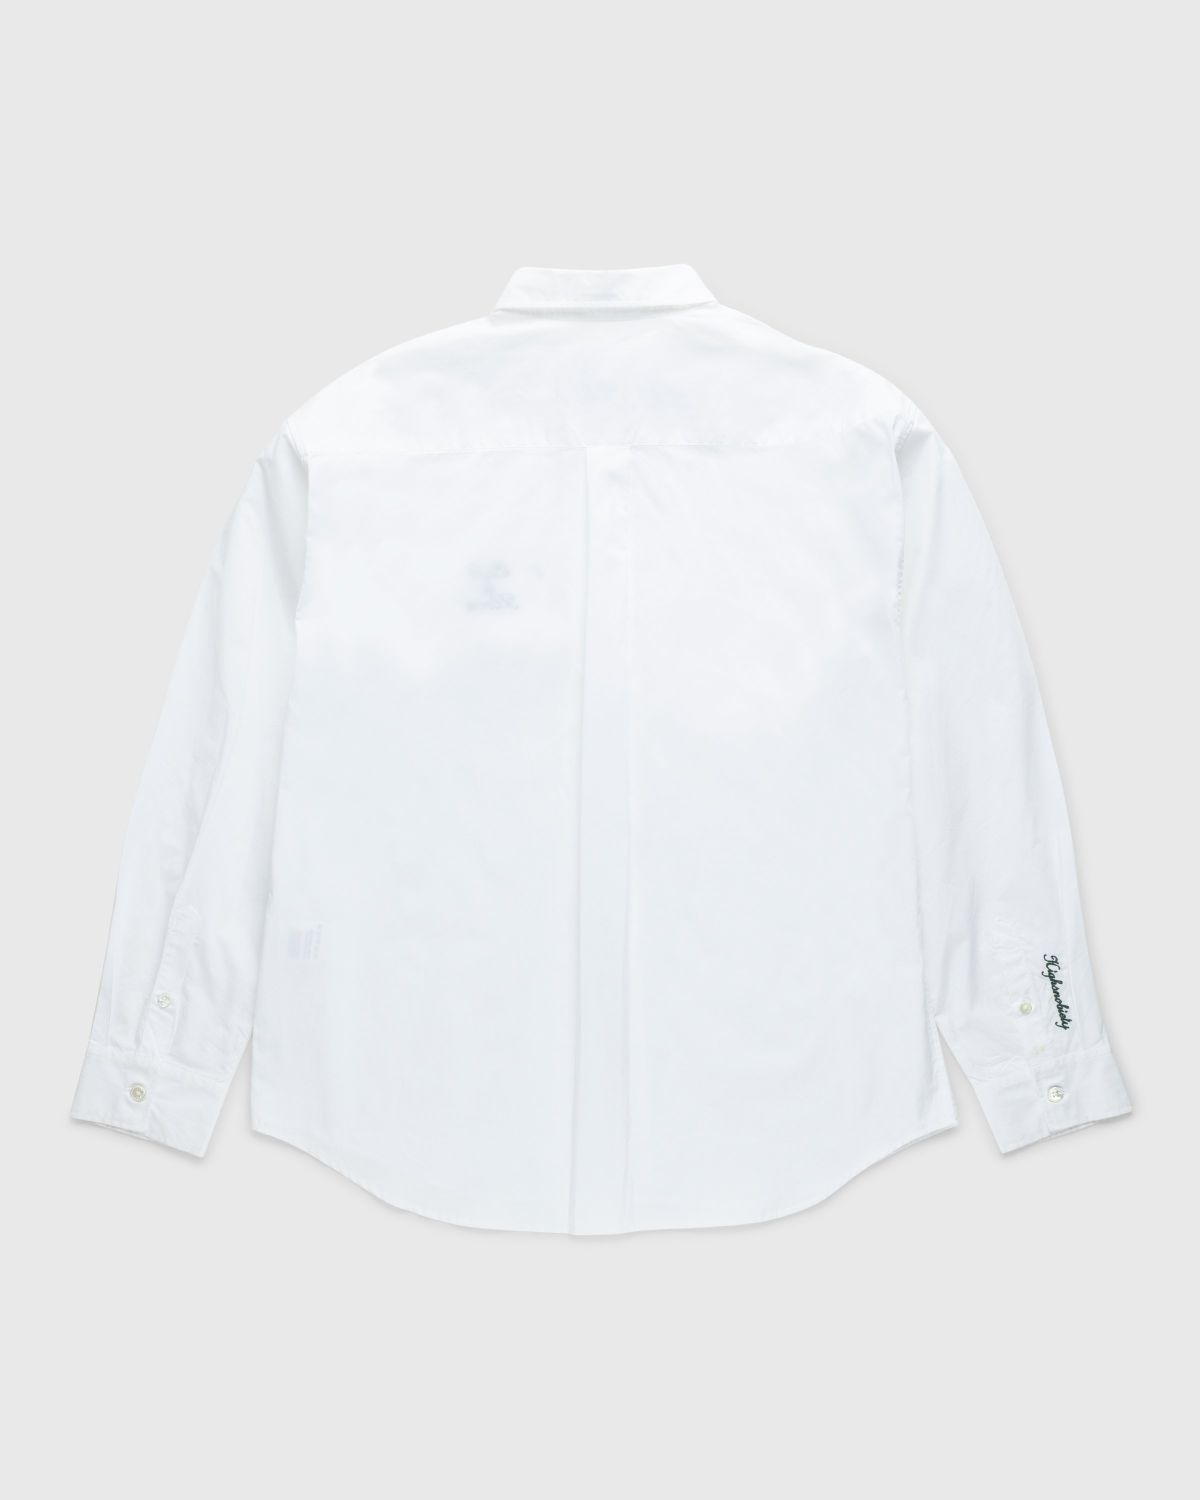 Café de Flore x Highsnobiety – Not In Paris 4 Poplin Shirt White - Longsleeve Shirts - White - Image 2